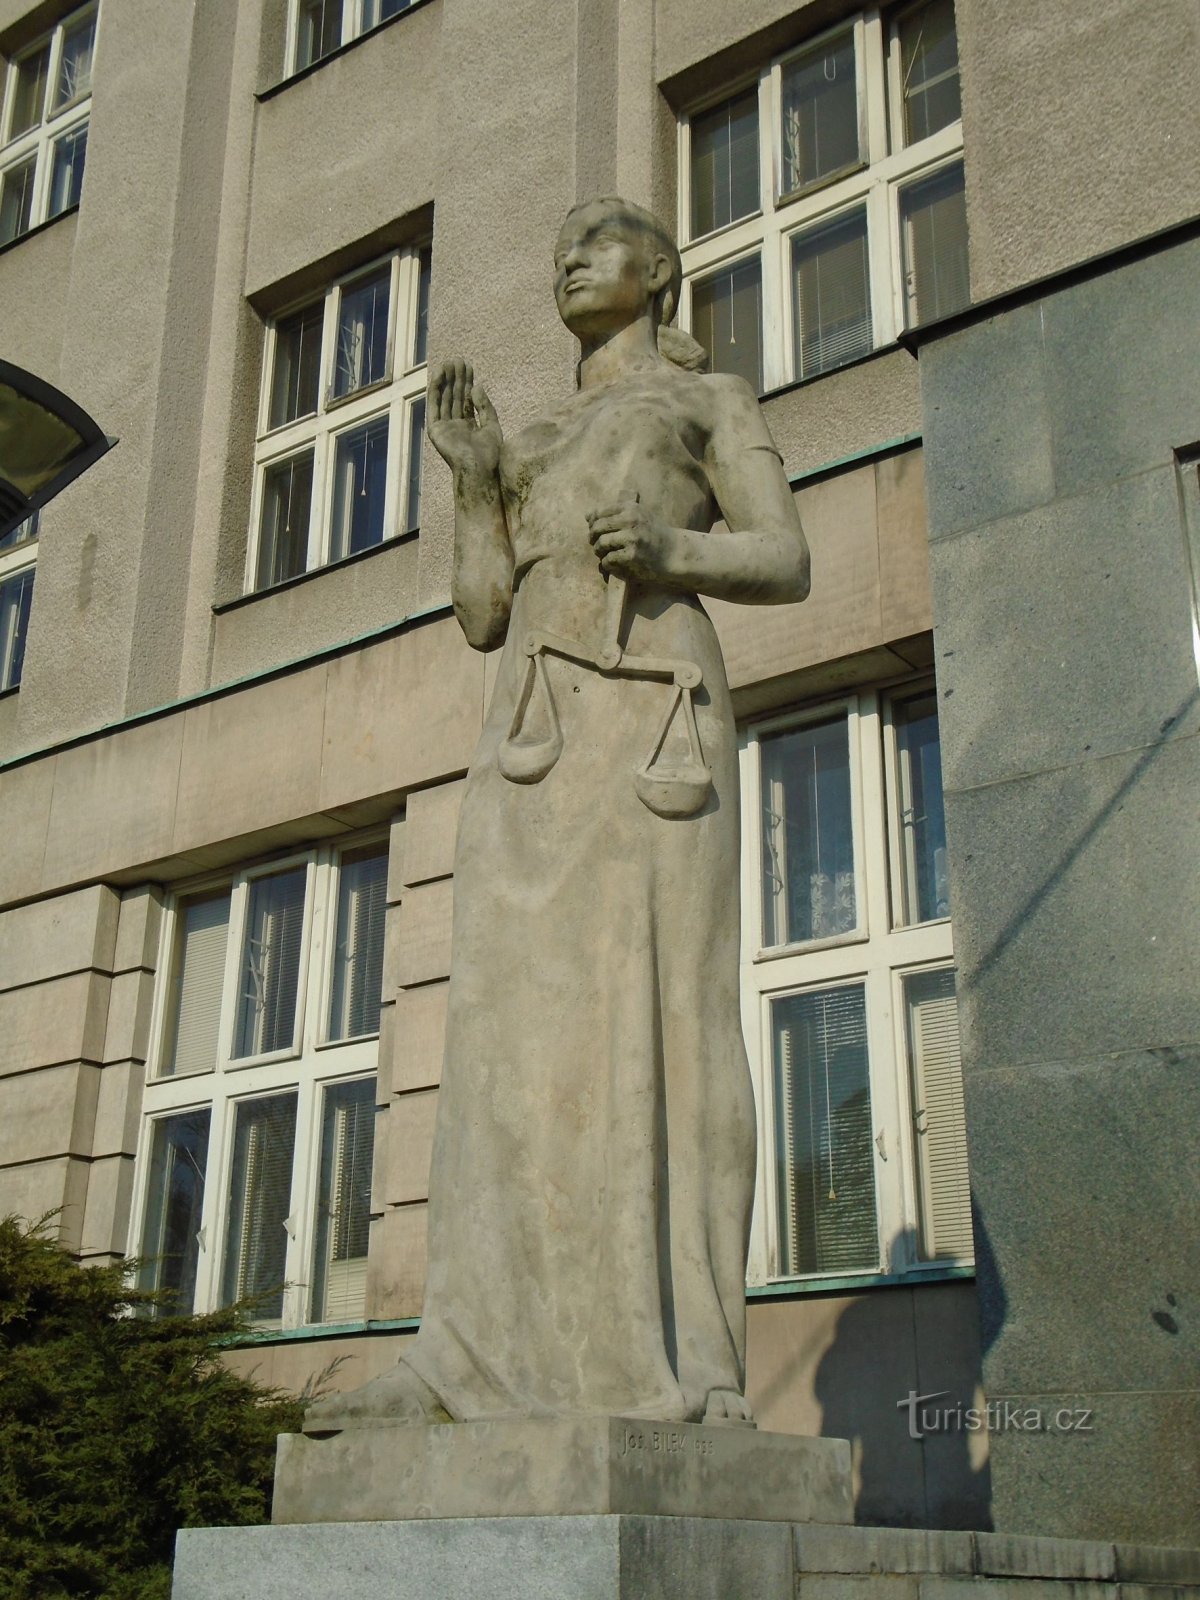 Statue of Justice at the entrance to the regional court (Hradec Králové, April 1.4.2018, XNUMX)